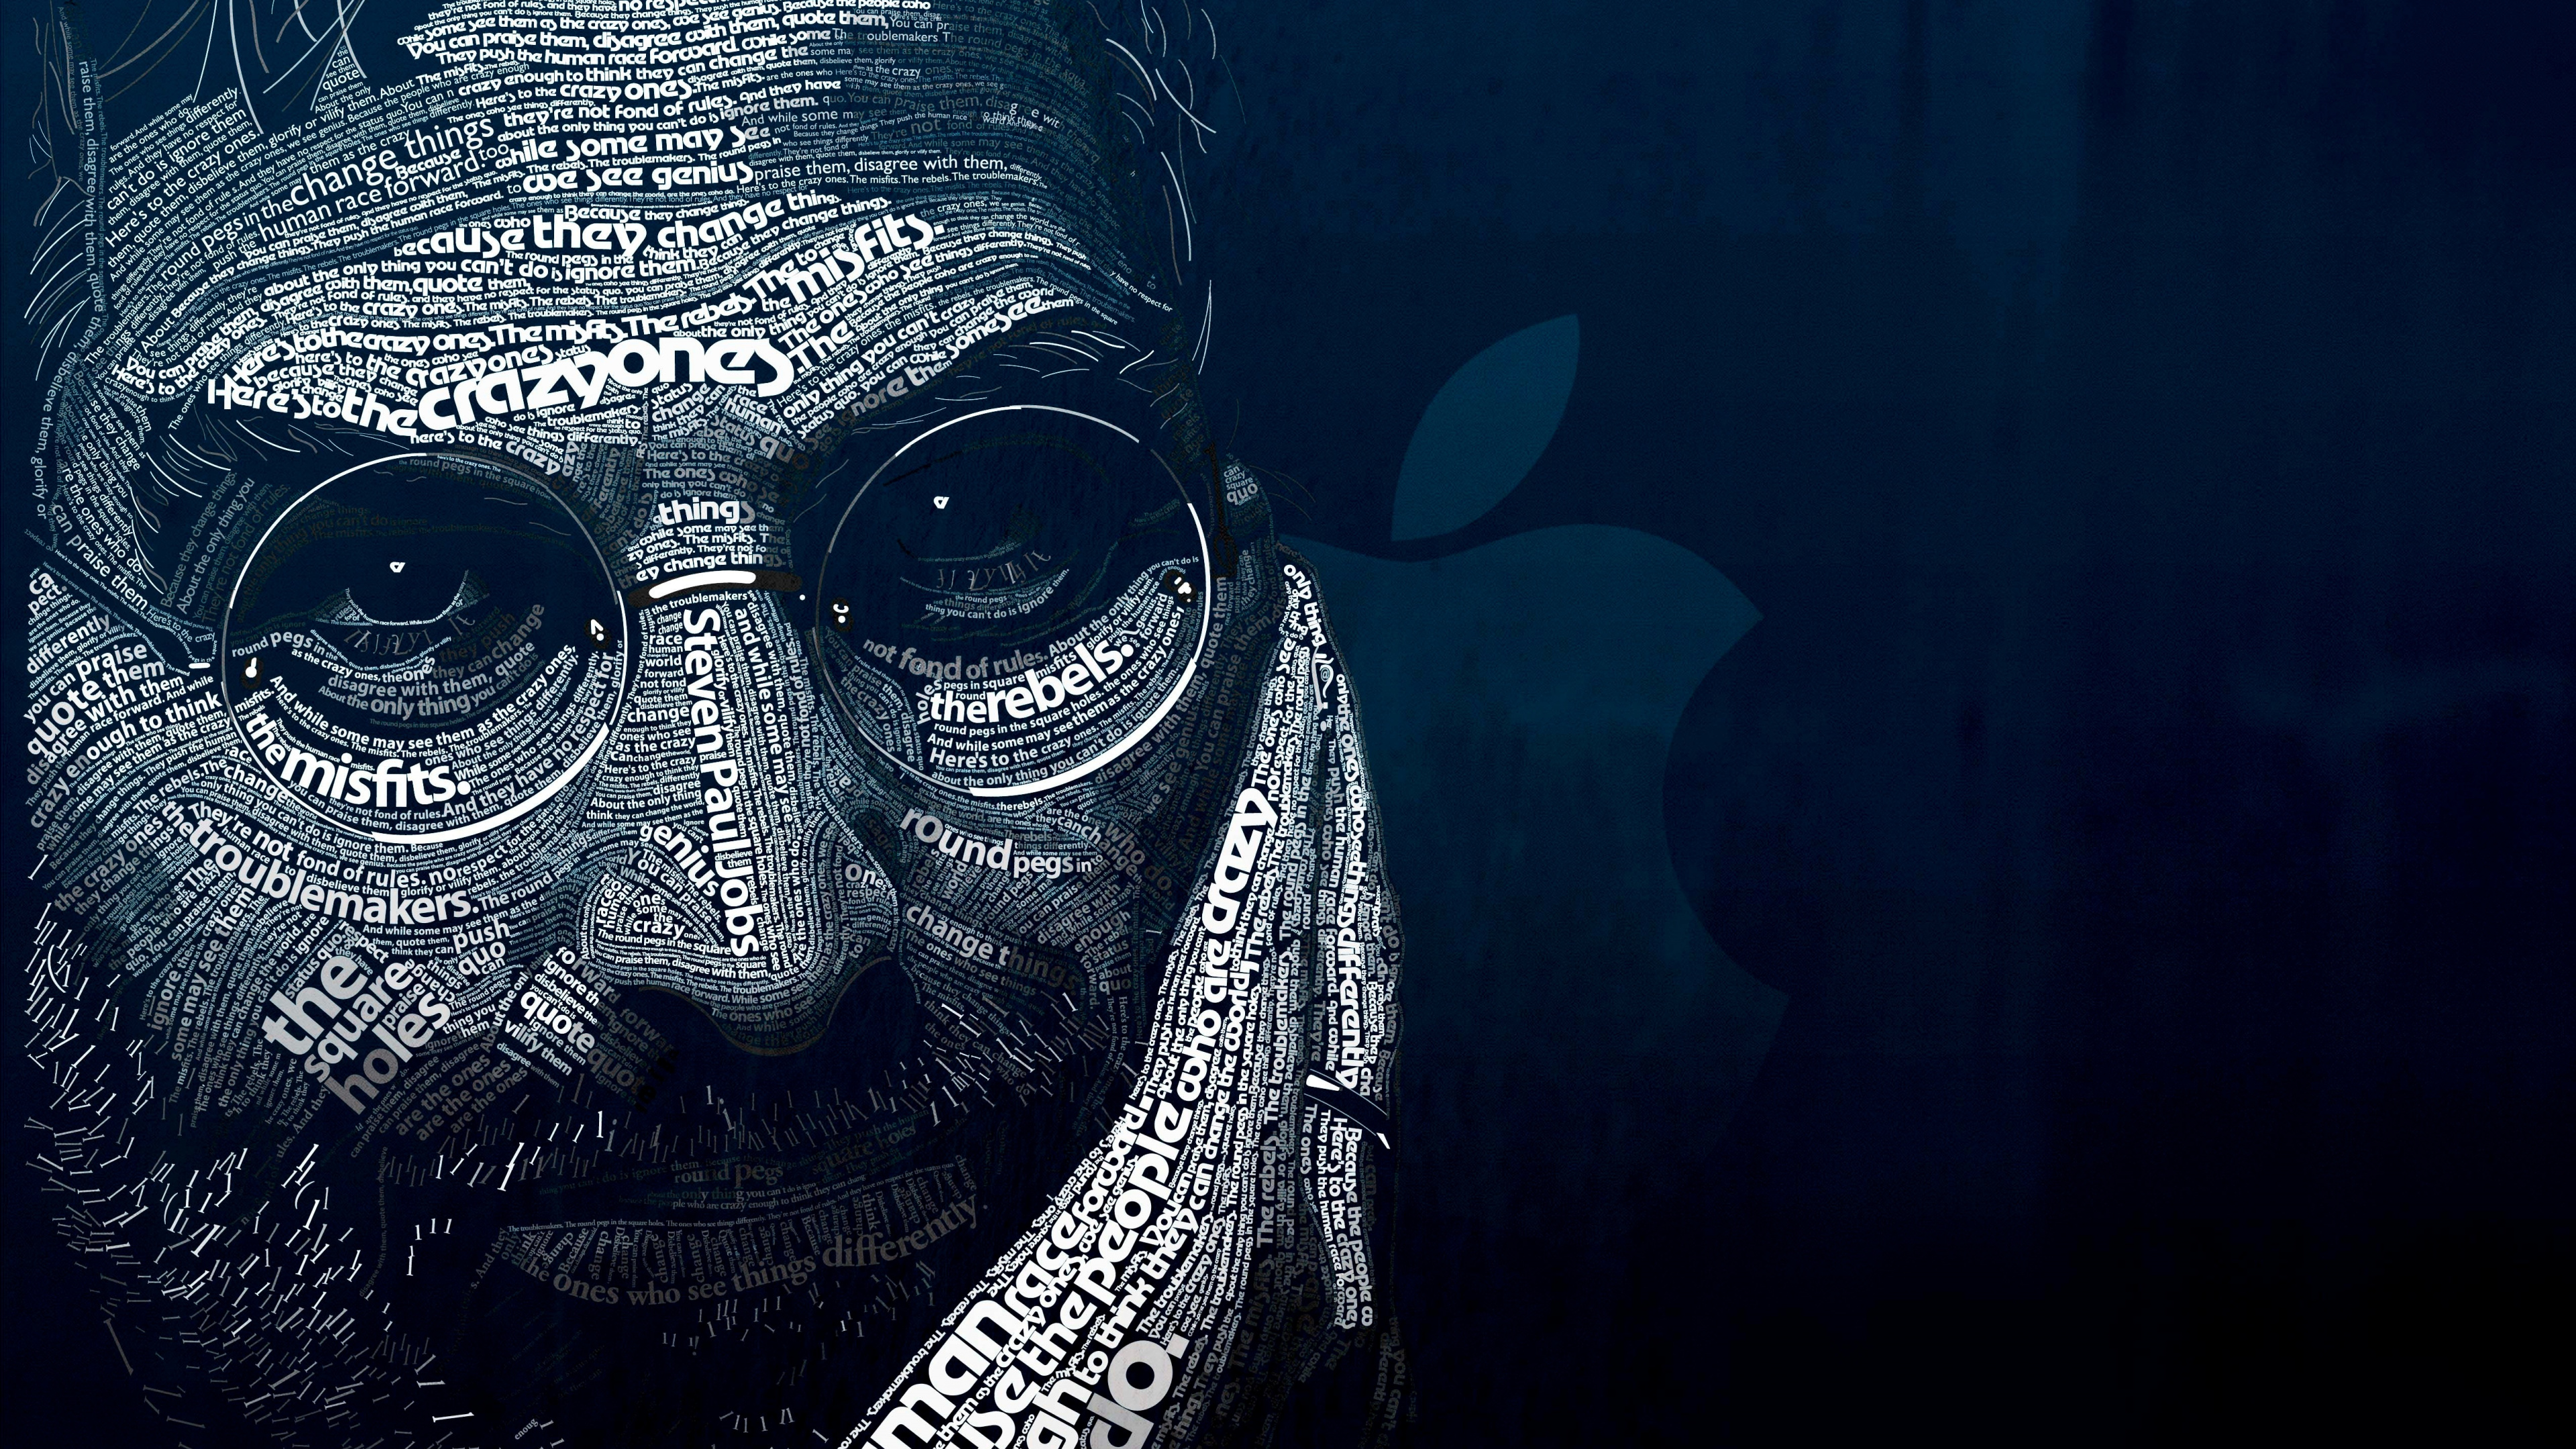 Steve Jobs, Apple, Masque, IPod, Humanos. Wallpaper in 3840x2160 Resolution